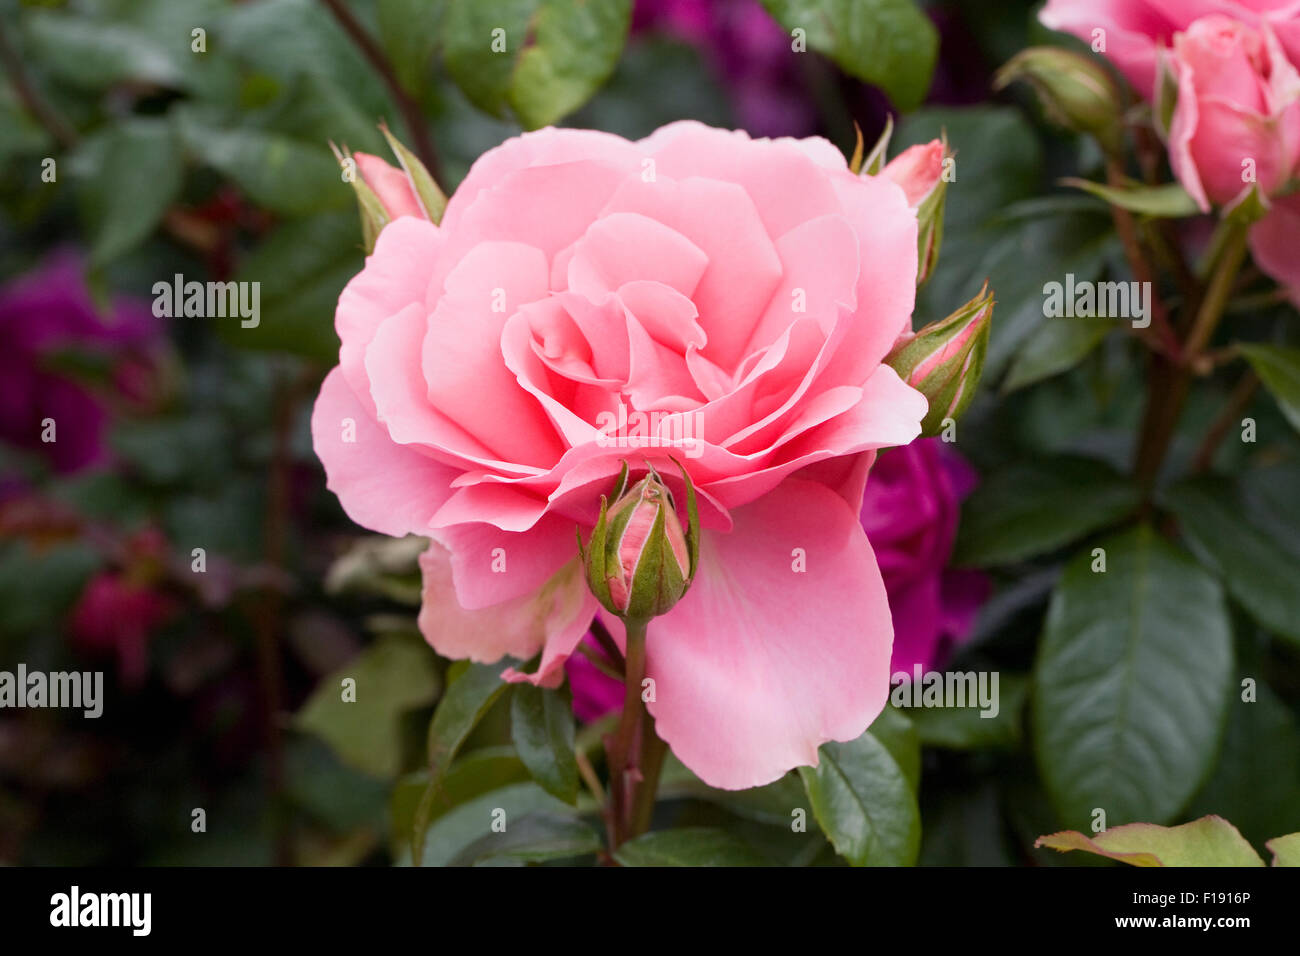 Rosa sei bellissima 'Fryacy' Foto stock - Alamy